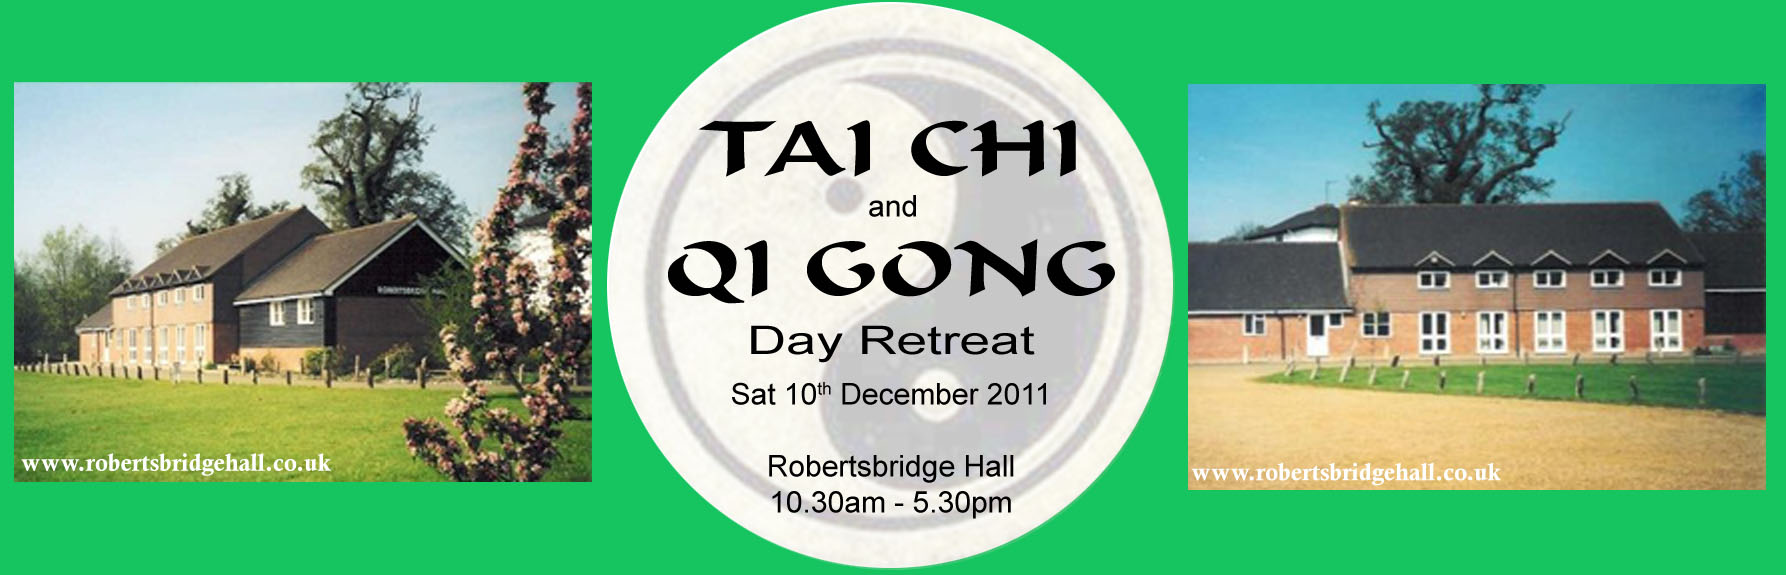 QI GONG & TAI CHI RETREAT 10th DECEMBER 2011